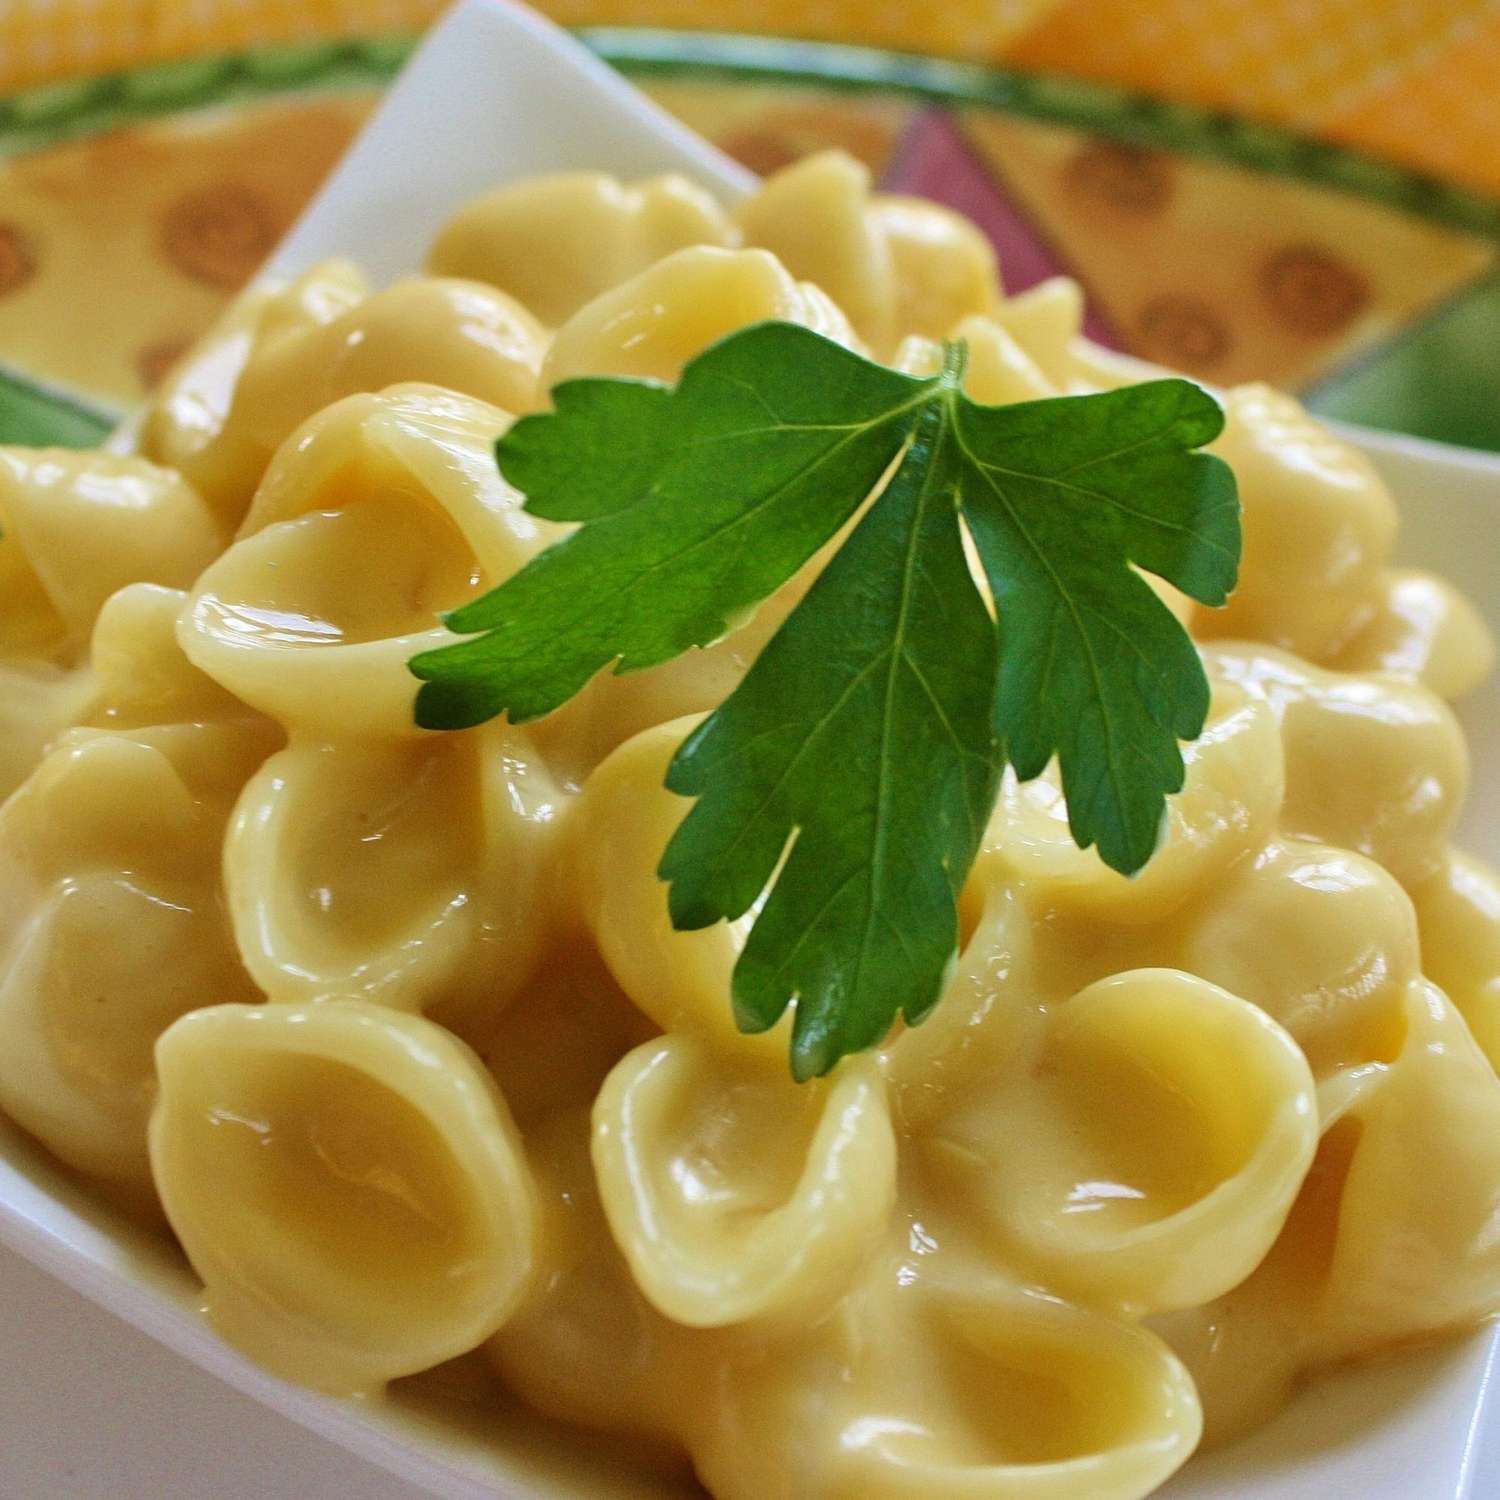 Microwave Macaroni and Cheese